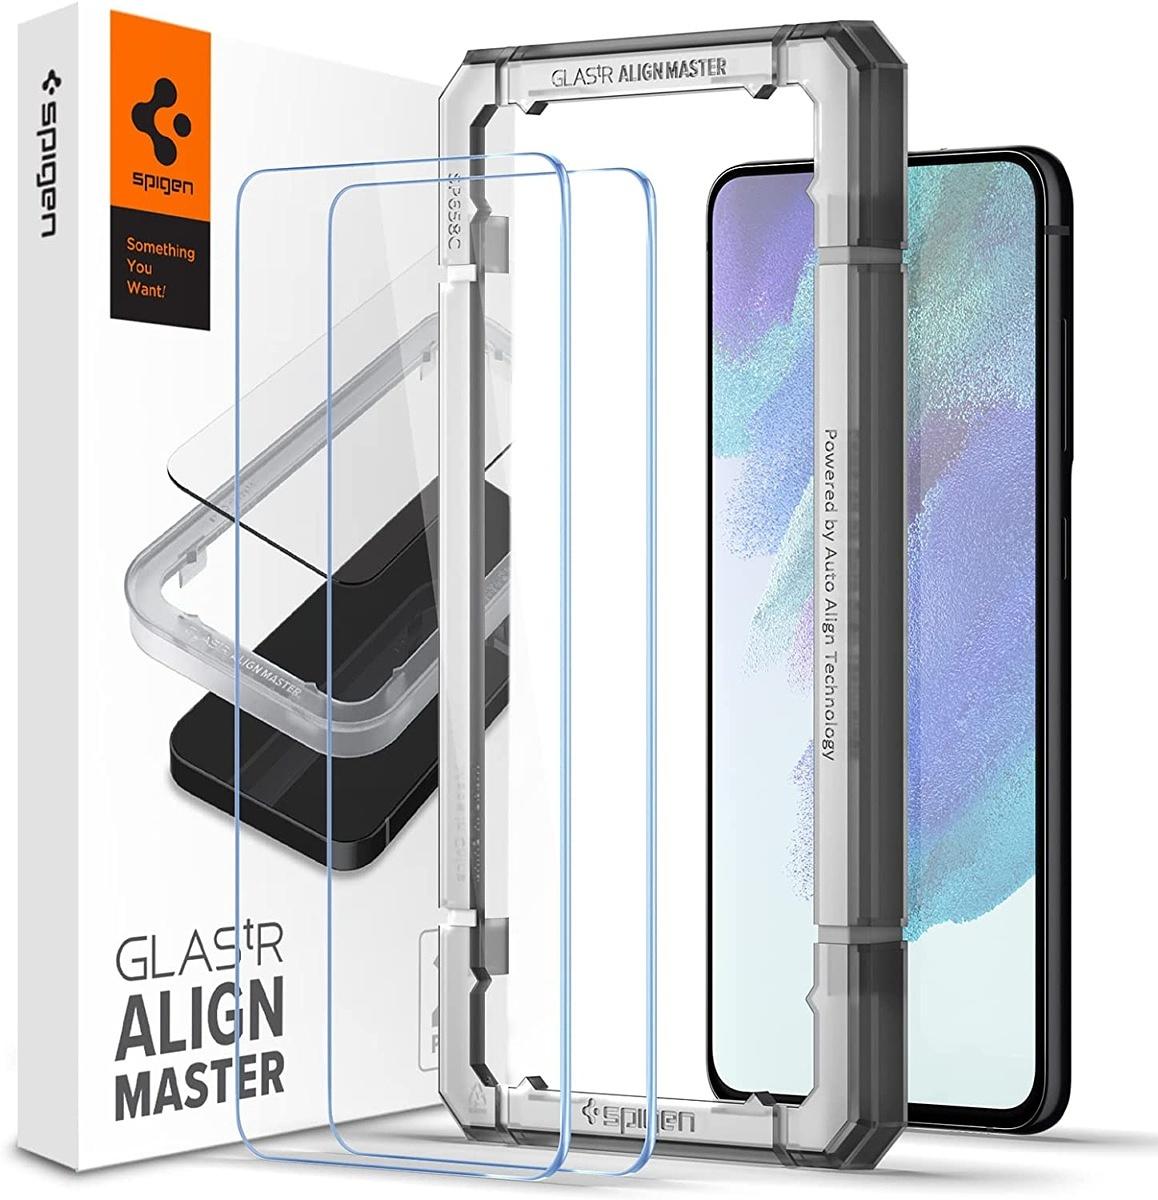 The best Samsung Galaxy S21 FE screen protectors